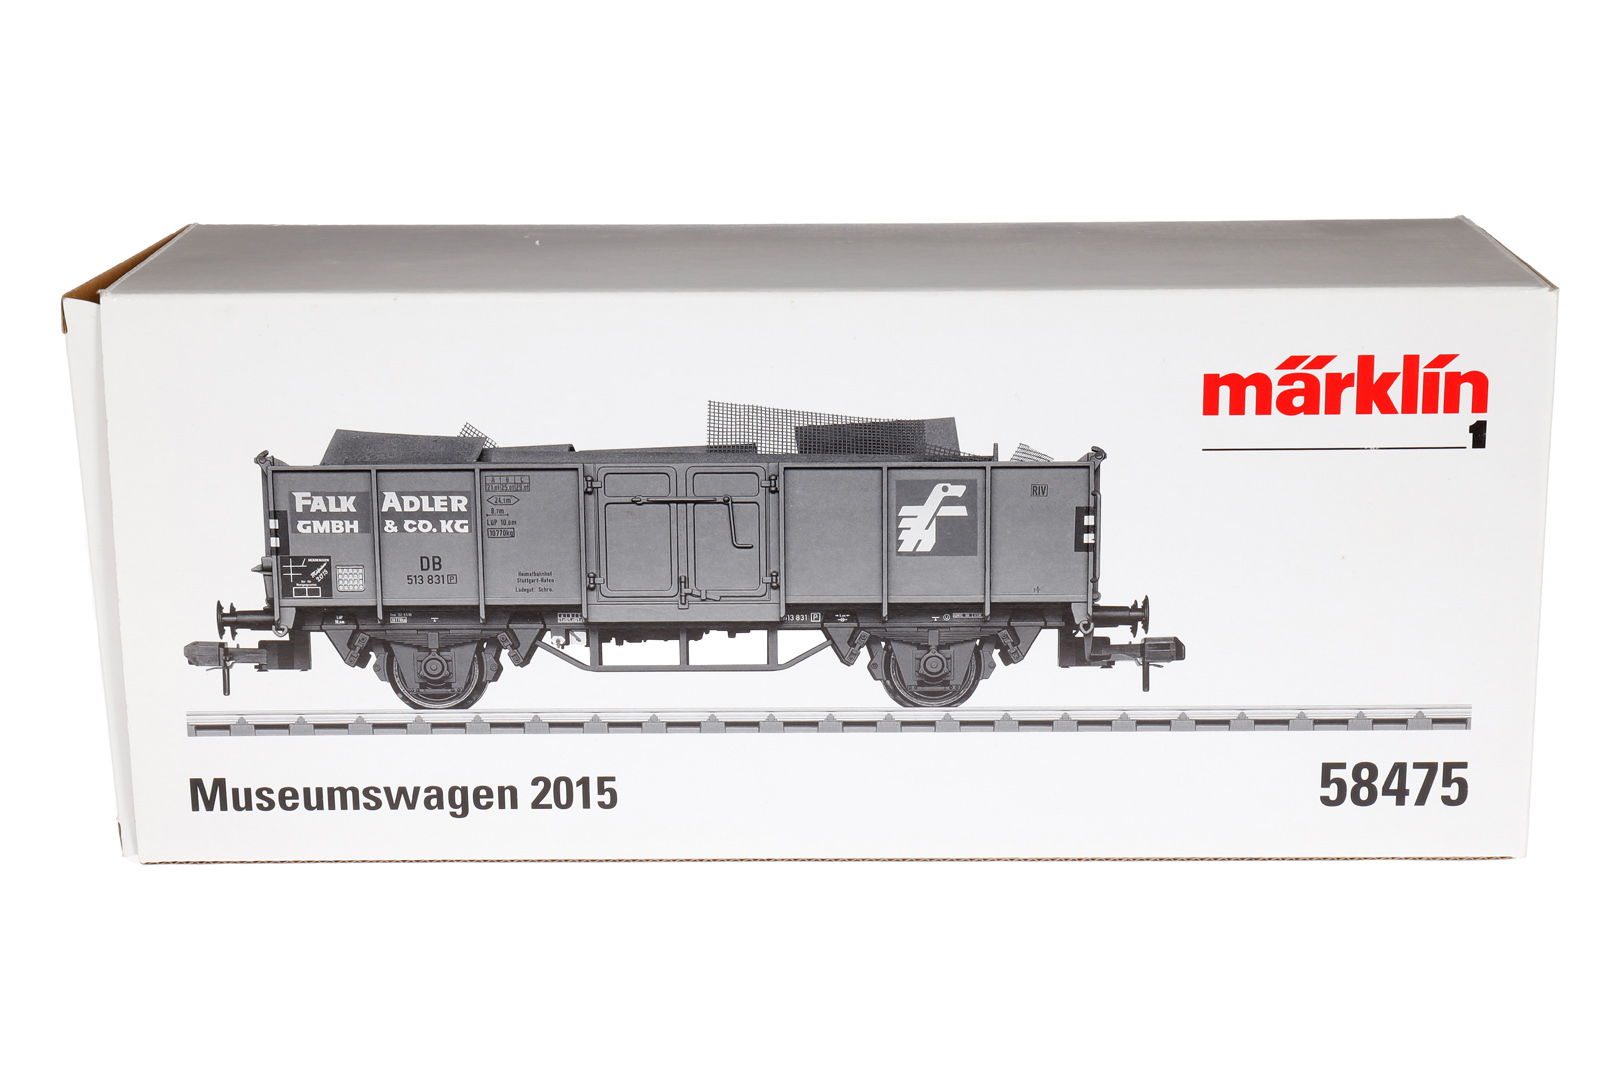 Märklin offener Güterwagen ”Museum 2015” 58475, Spur 1, türkisgrün, Alterungsspuren, L 31,5, im